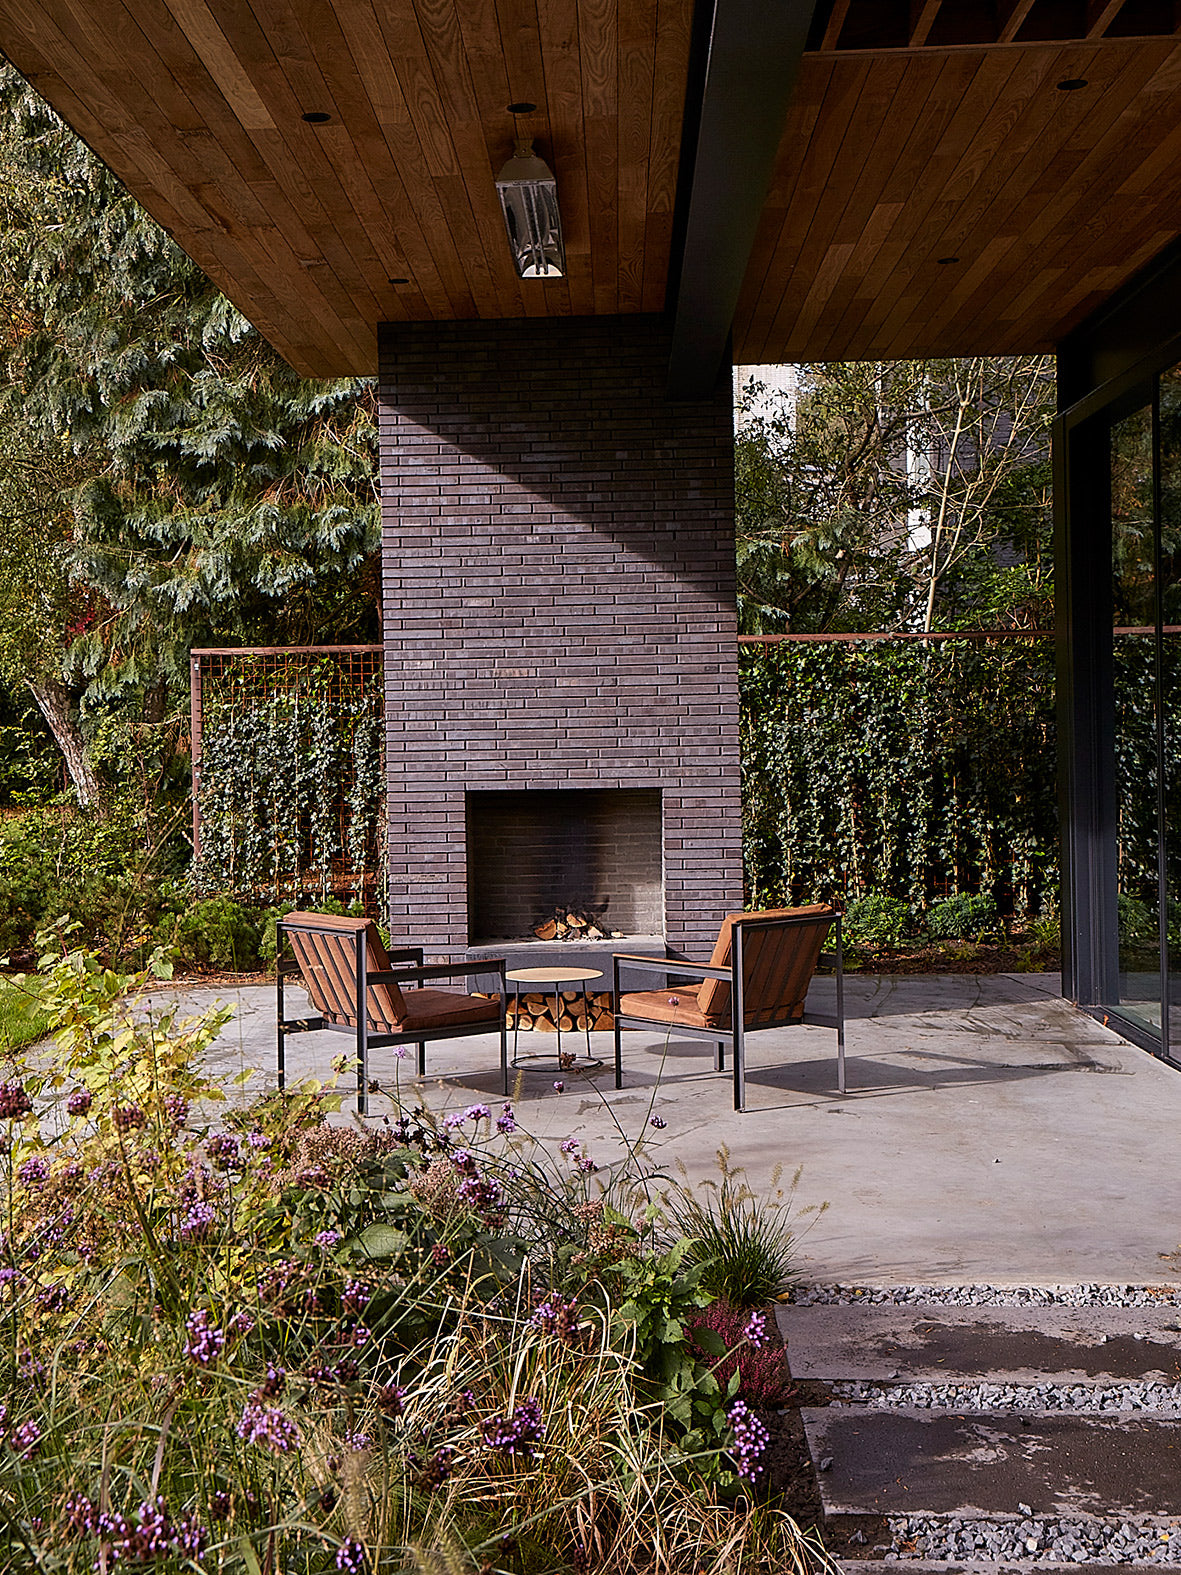 Modern outdoor fire place relax area in nature - Artempo Interior Architecture Design - Kasia Gatkowska for ELLE